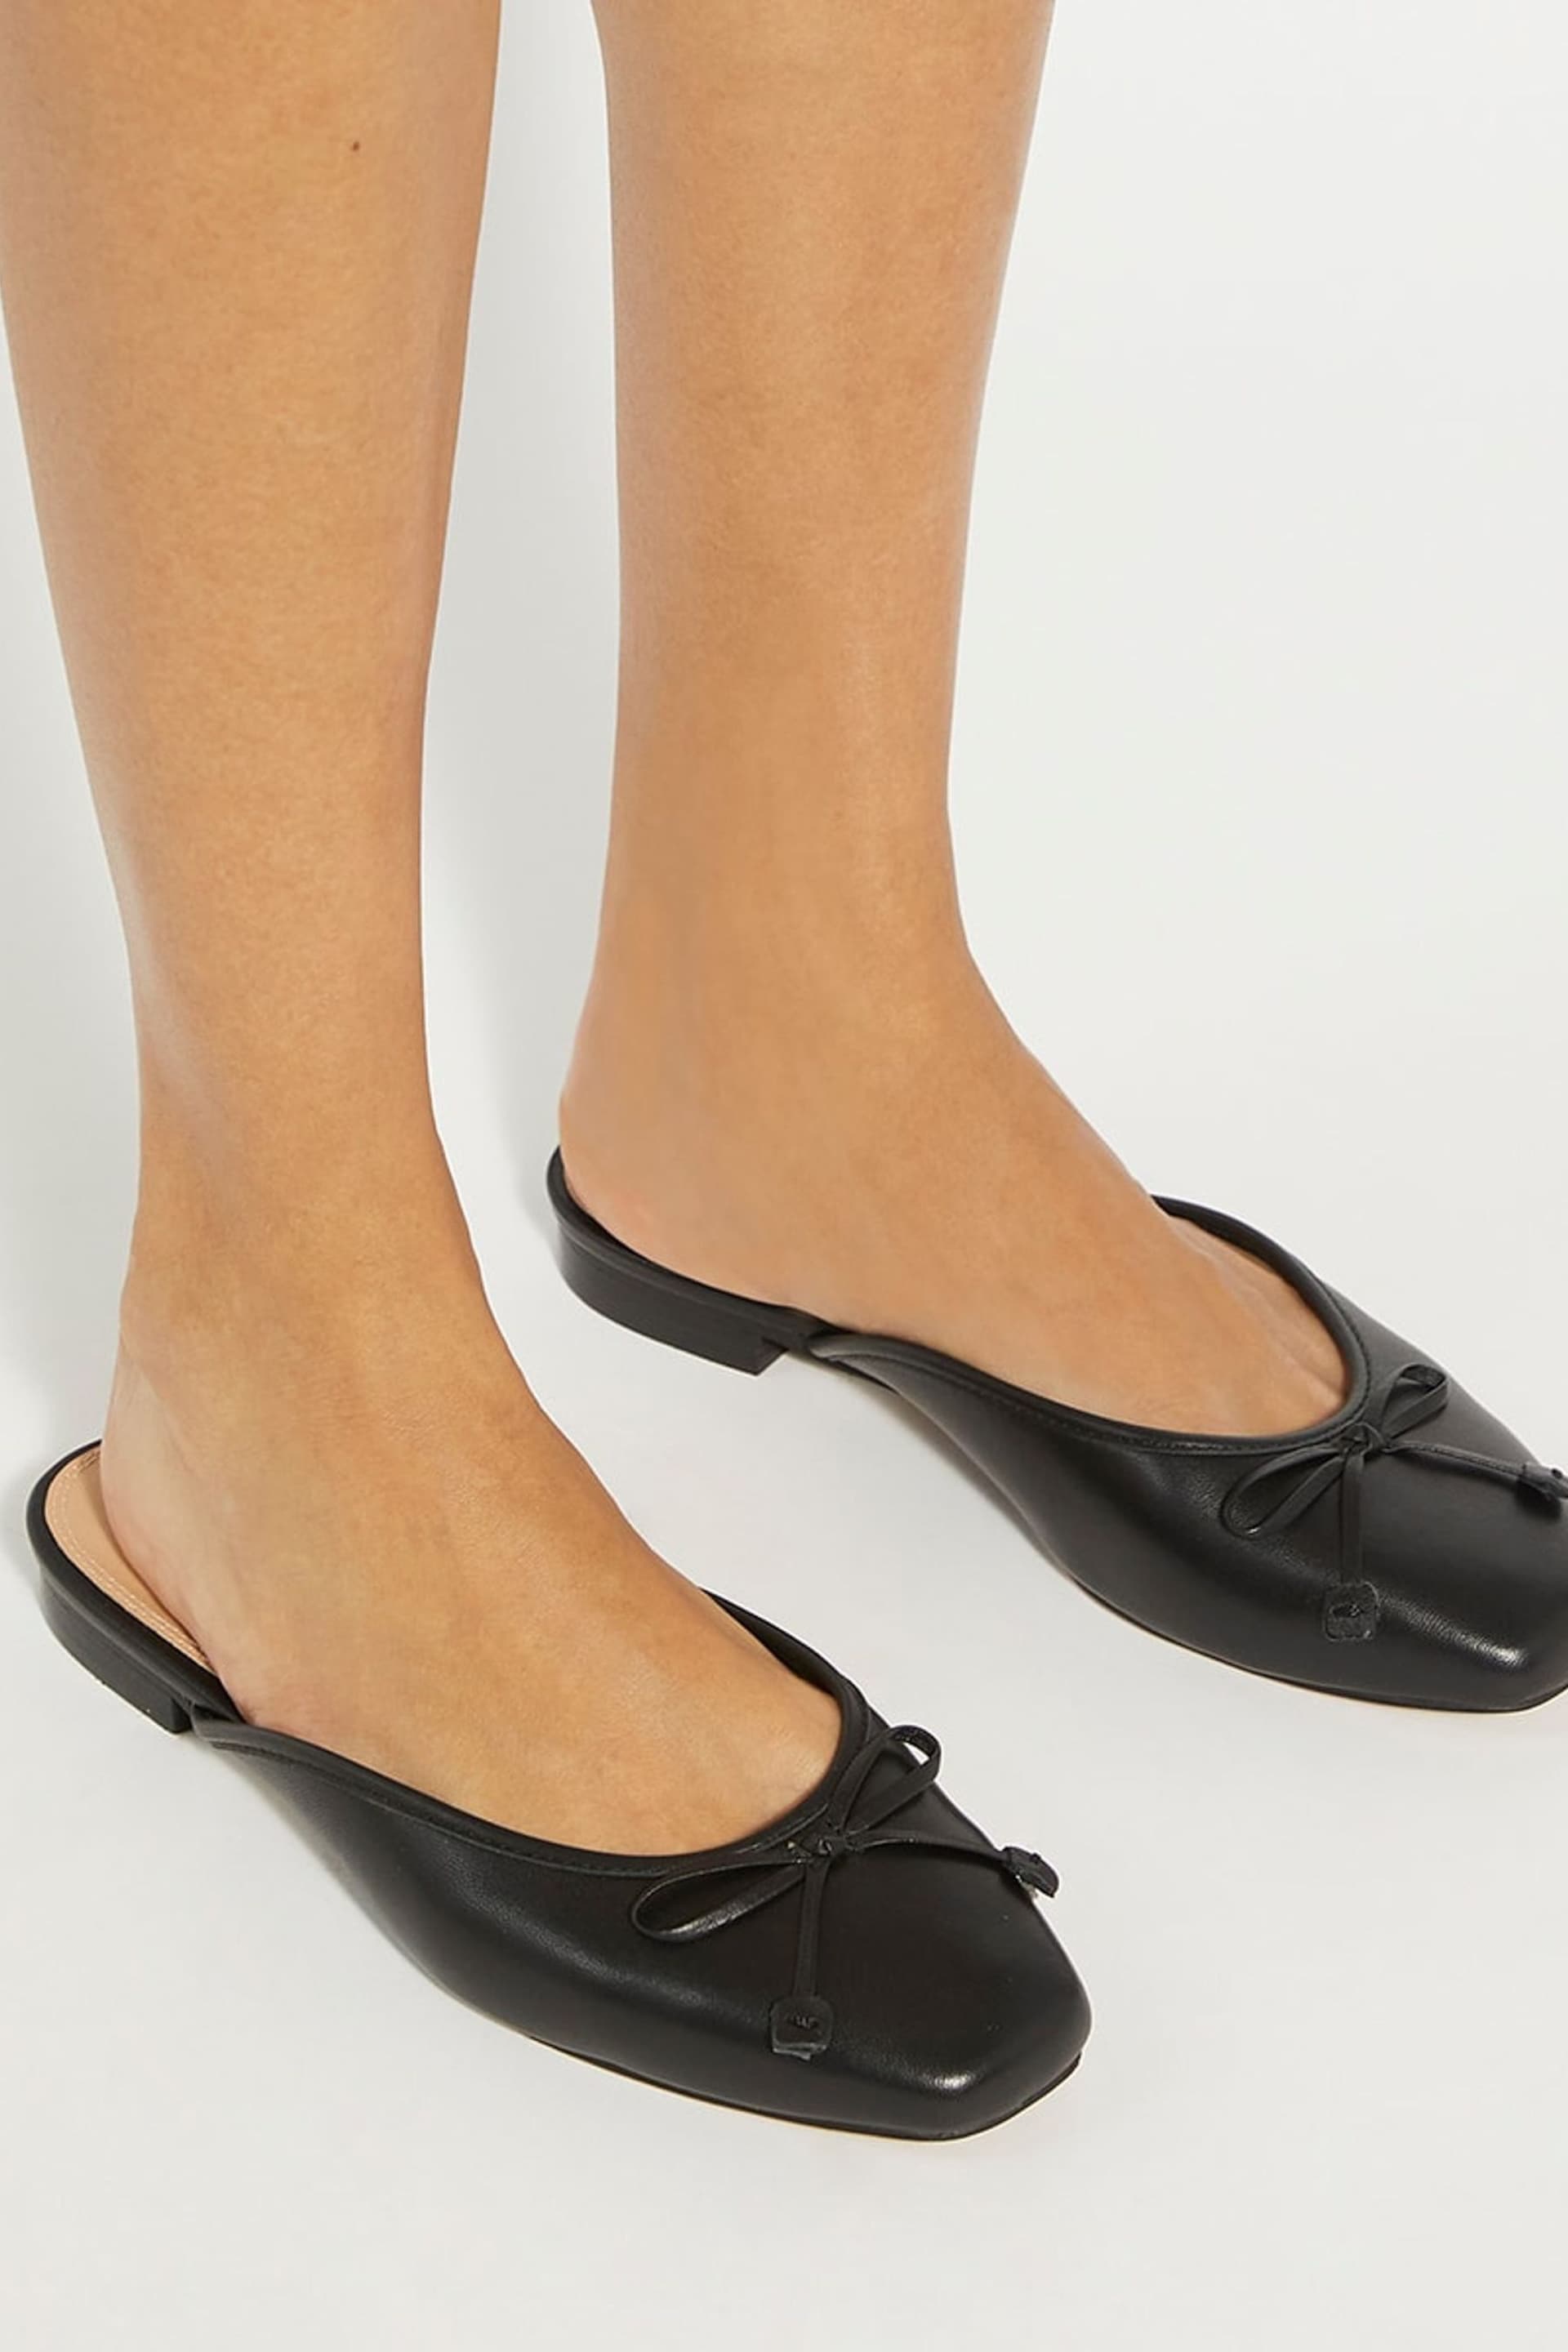 Dune London Black Haylas Ballerina Shoes - Image 1 of 6